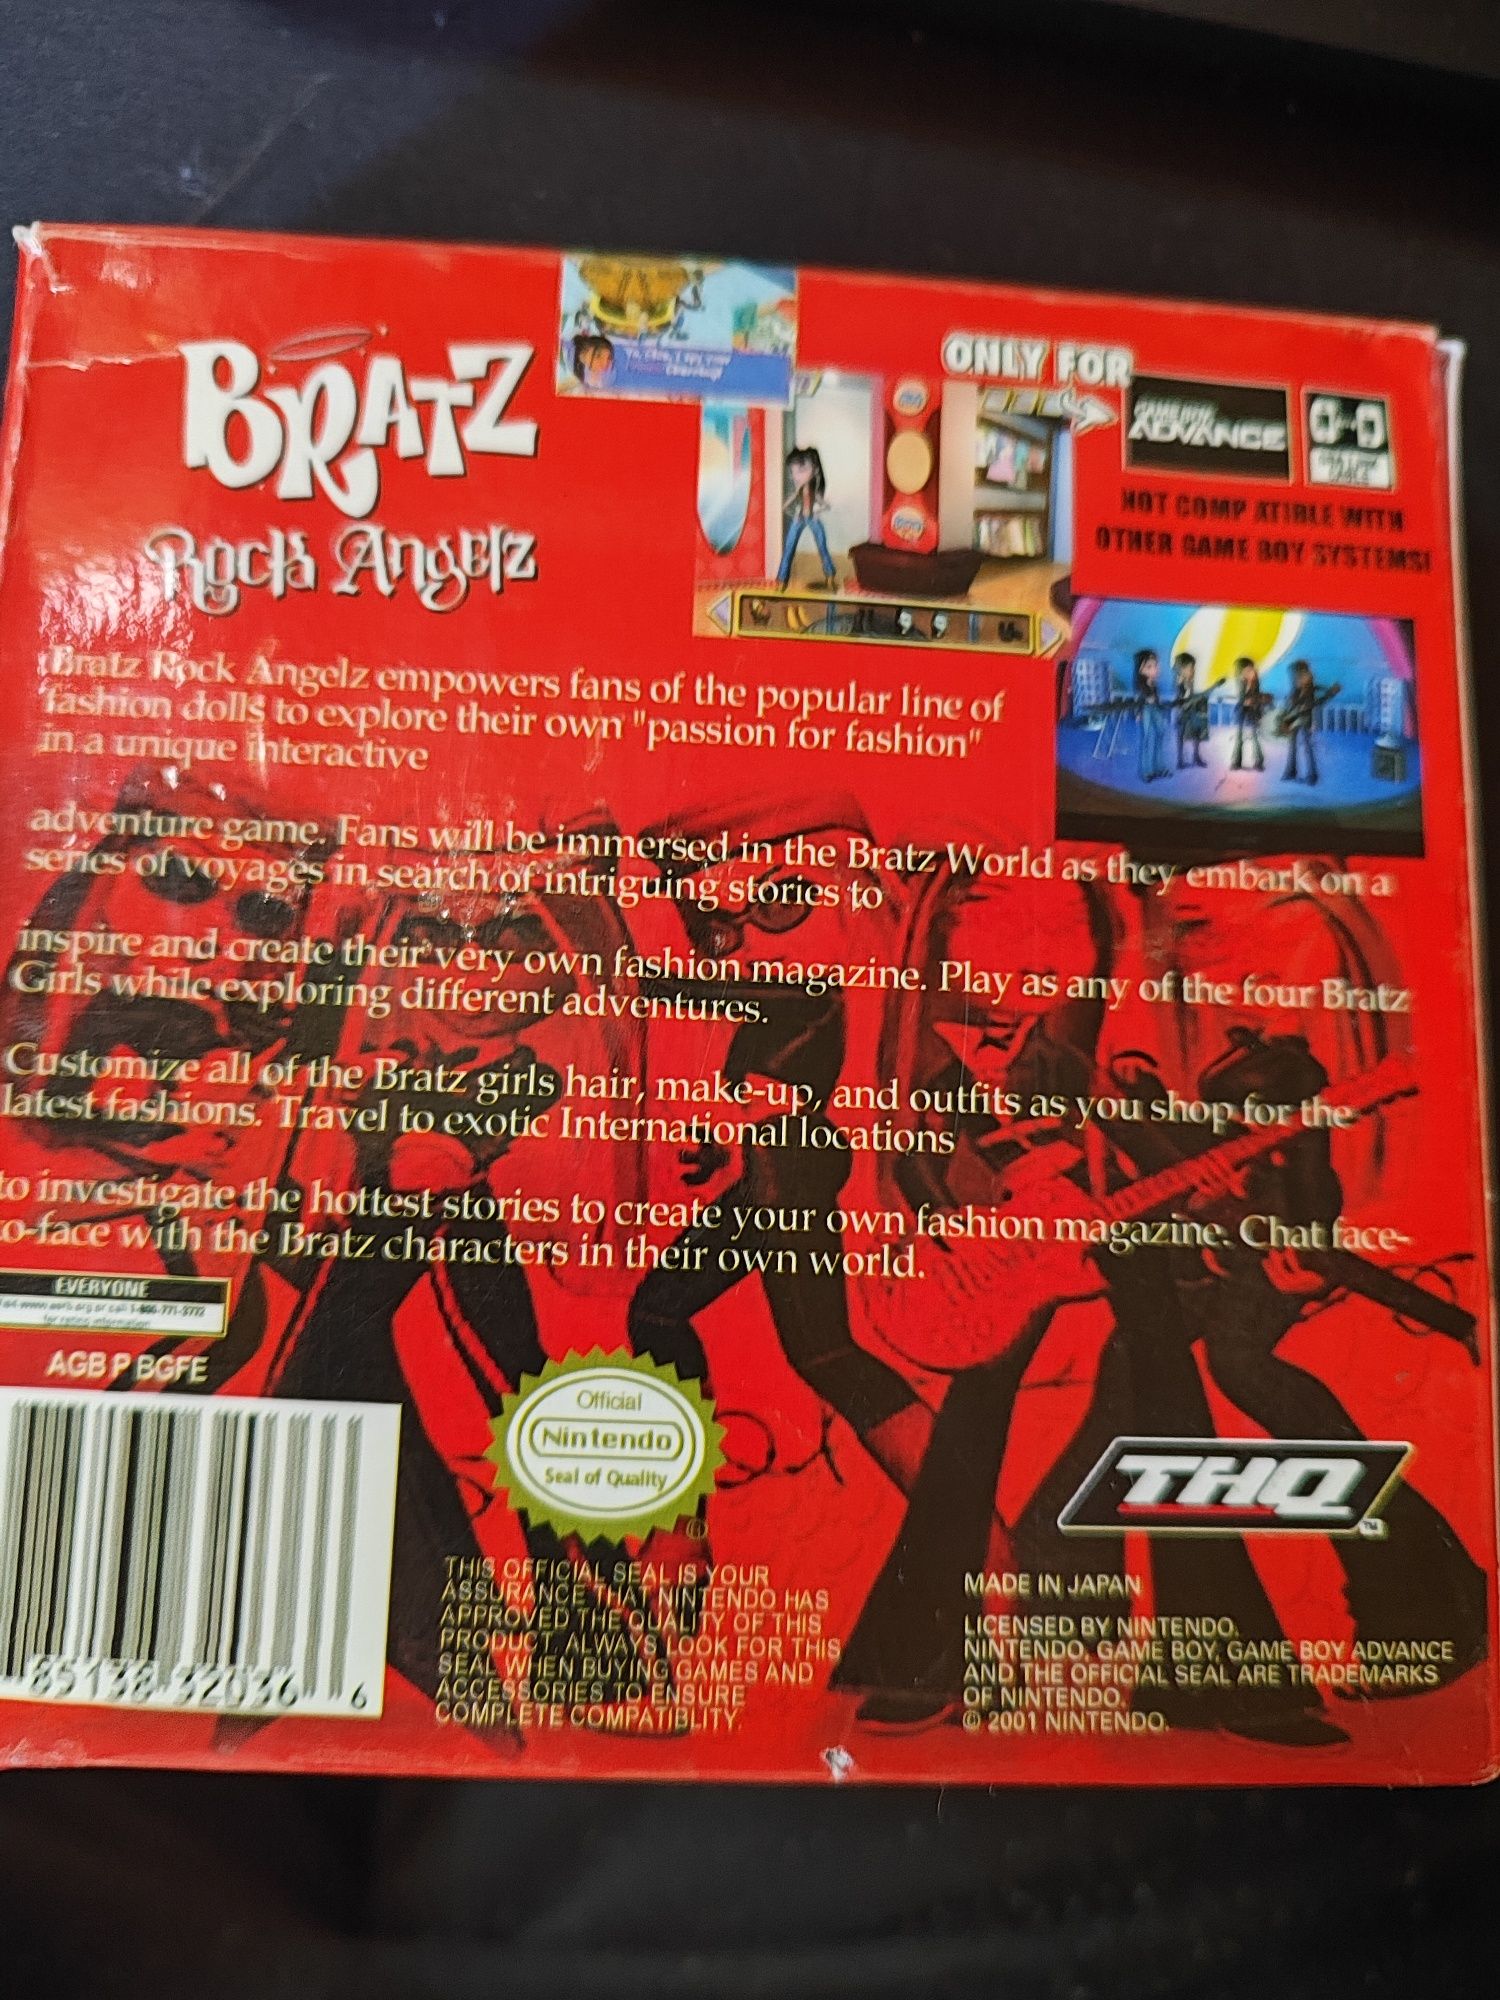 Bratz rock angelz gameboy advance GBA